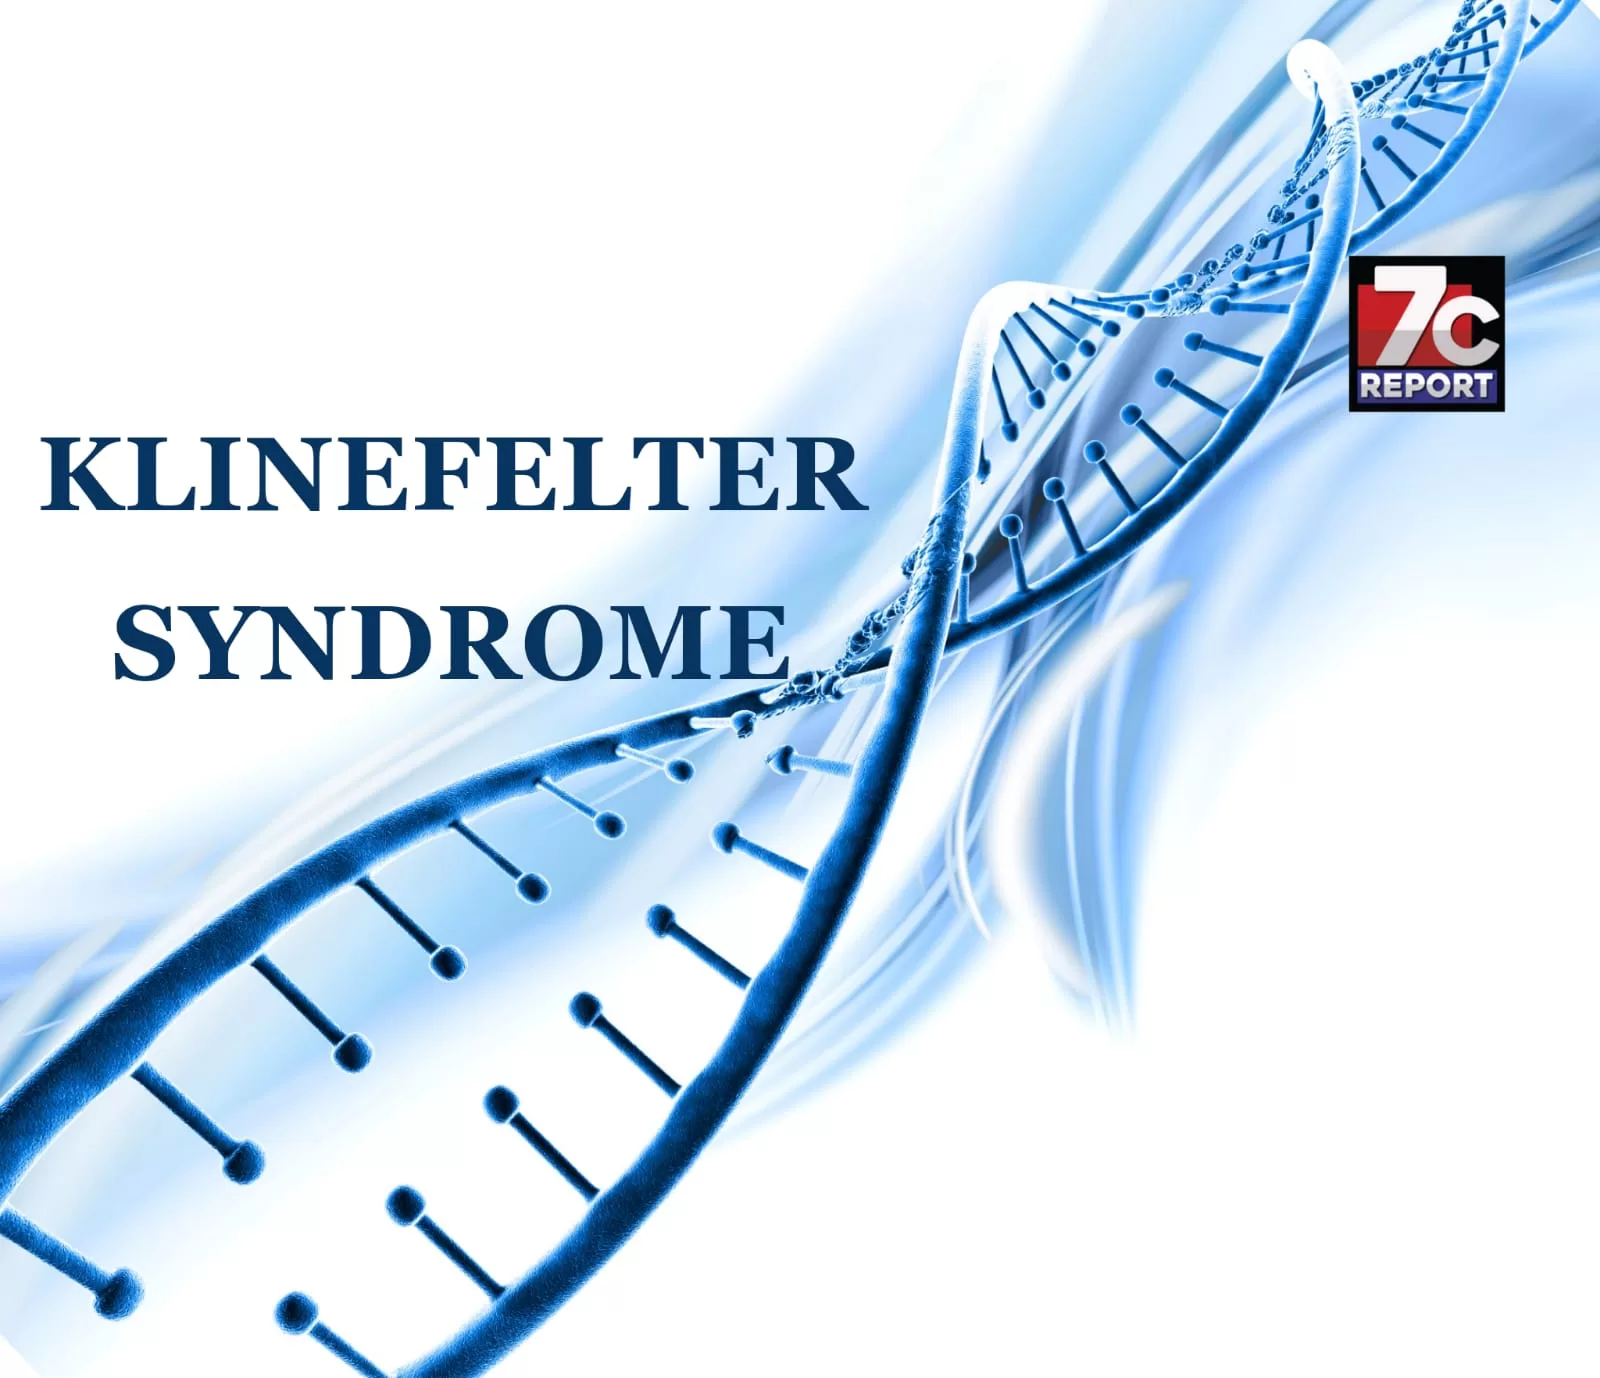 Klinefelter Syndrome - 7C Report